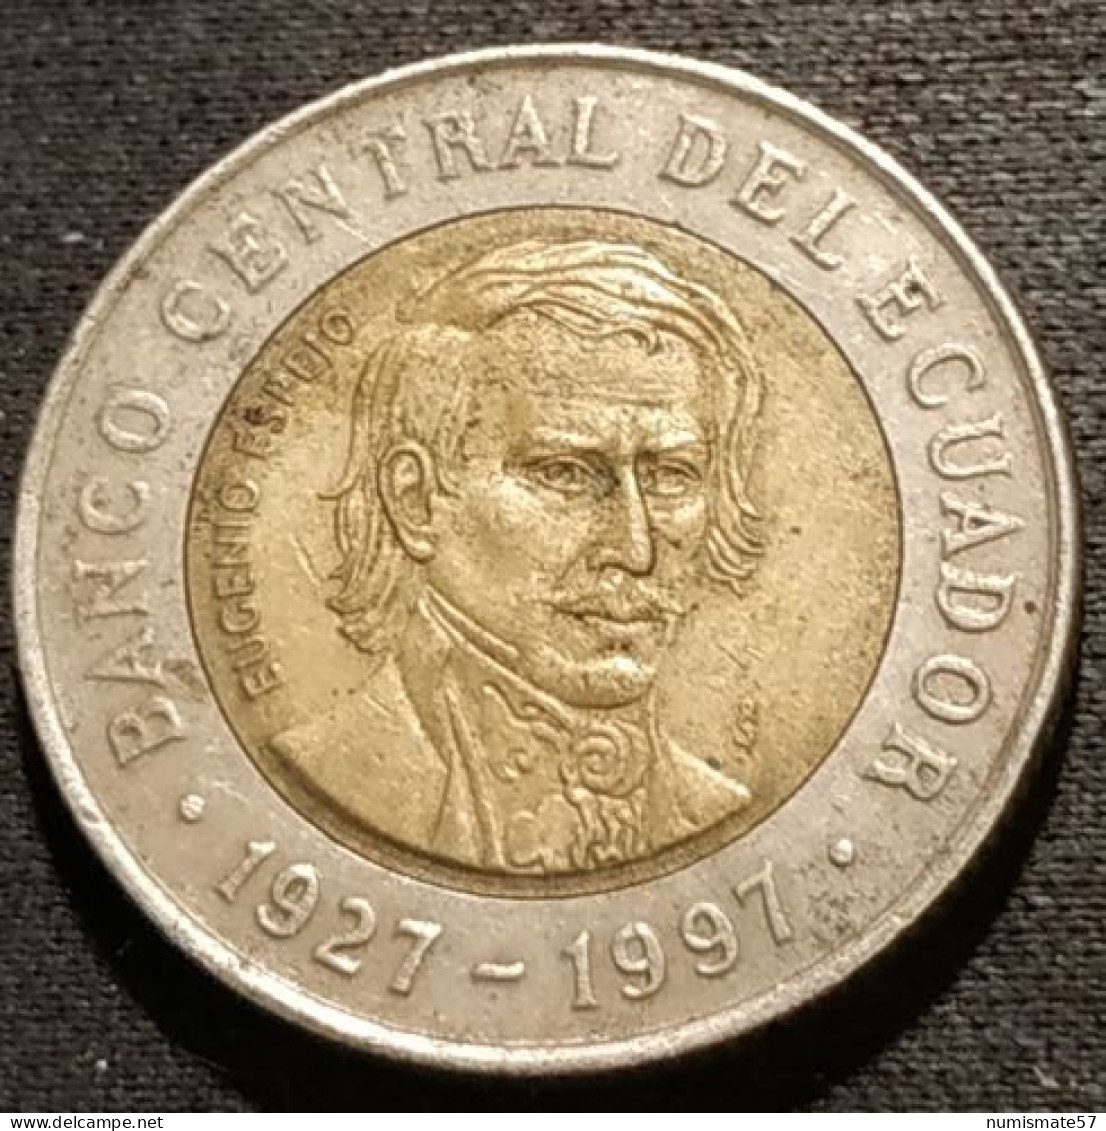 EQUATEUR - EQUATOR - 1000 SUCRES 1997 - KM 103 - Ecuador - EUGENIO ESPEJO - 70ème Anniversaire De La Banque Centrale - Ecuador